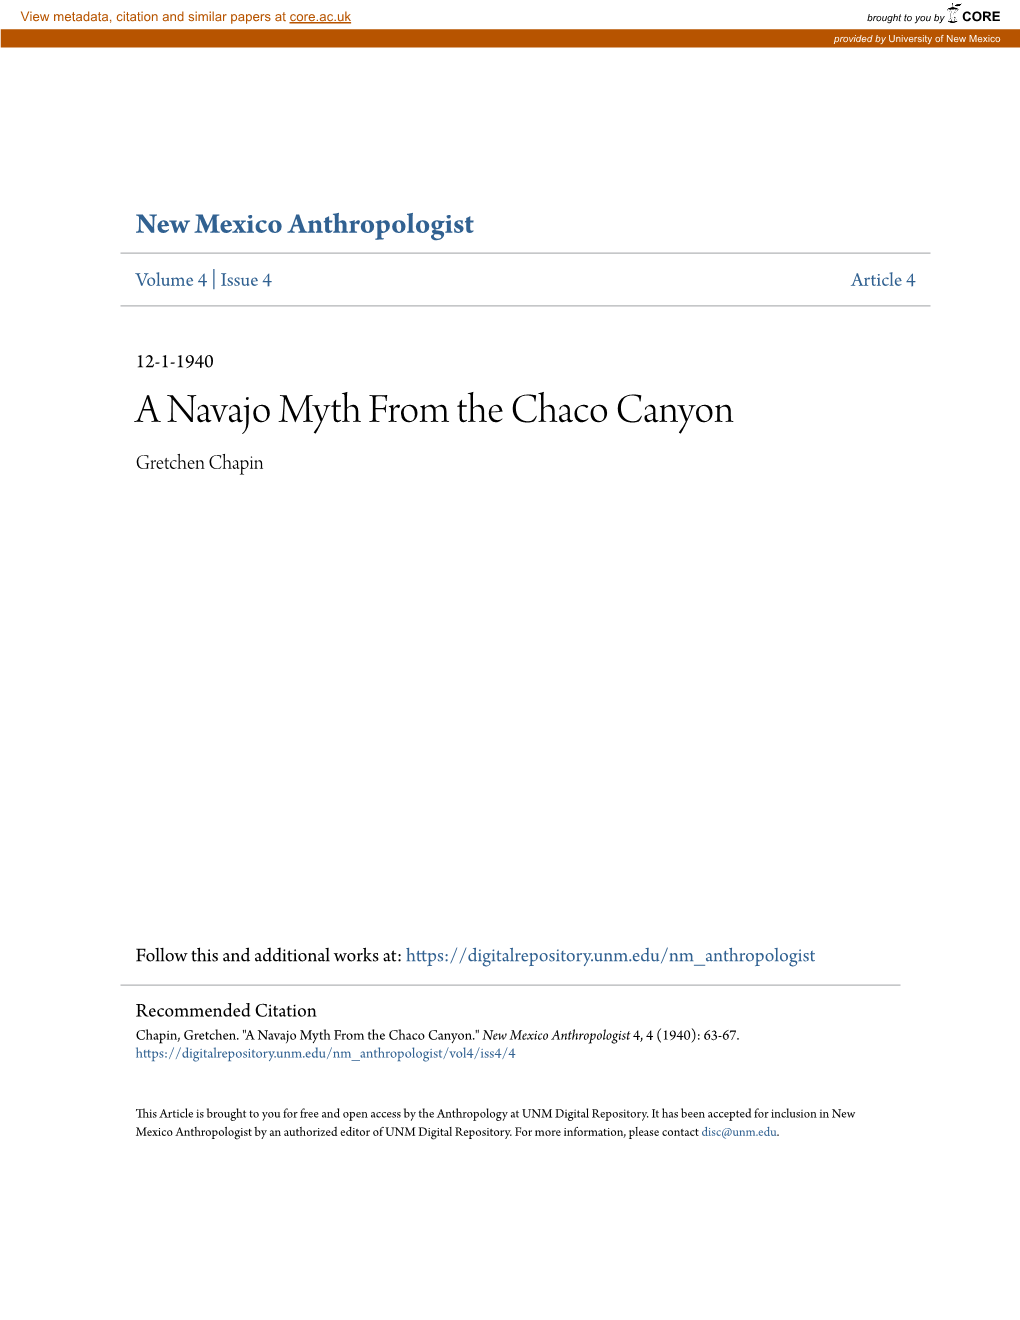 A Navajo Myth from the Chaco Canyon Gretchen Chapin